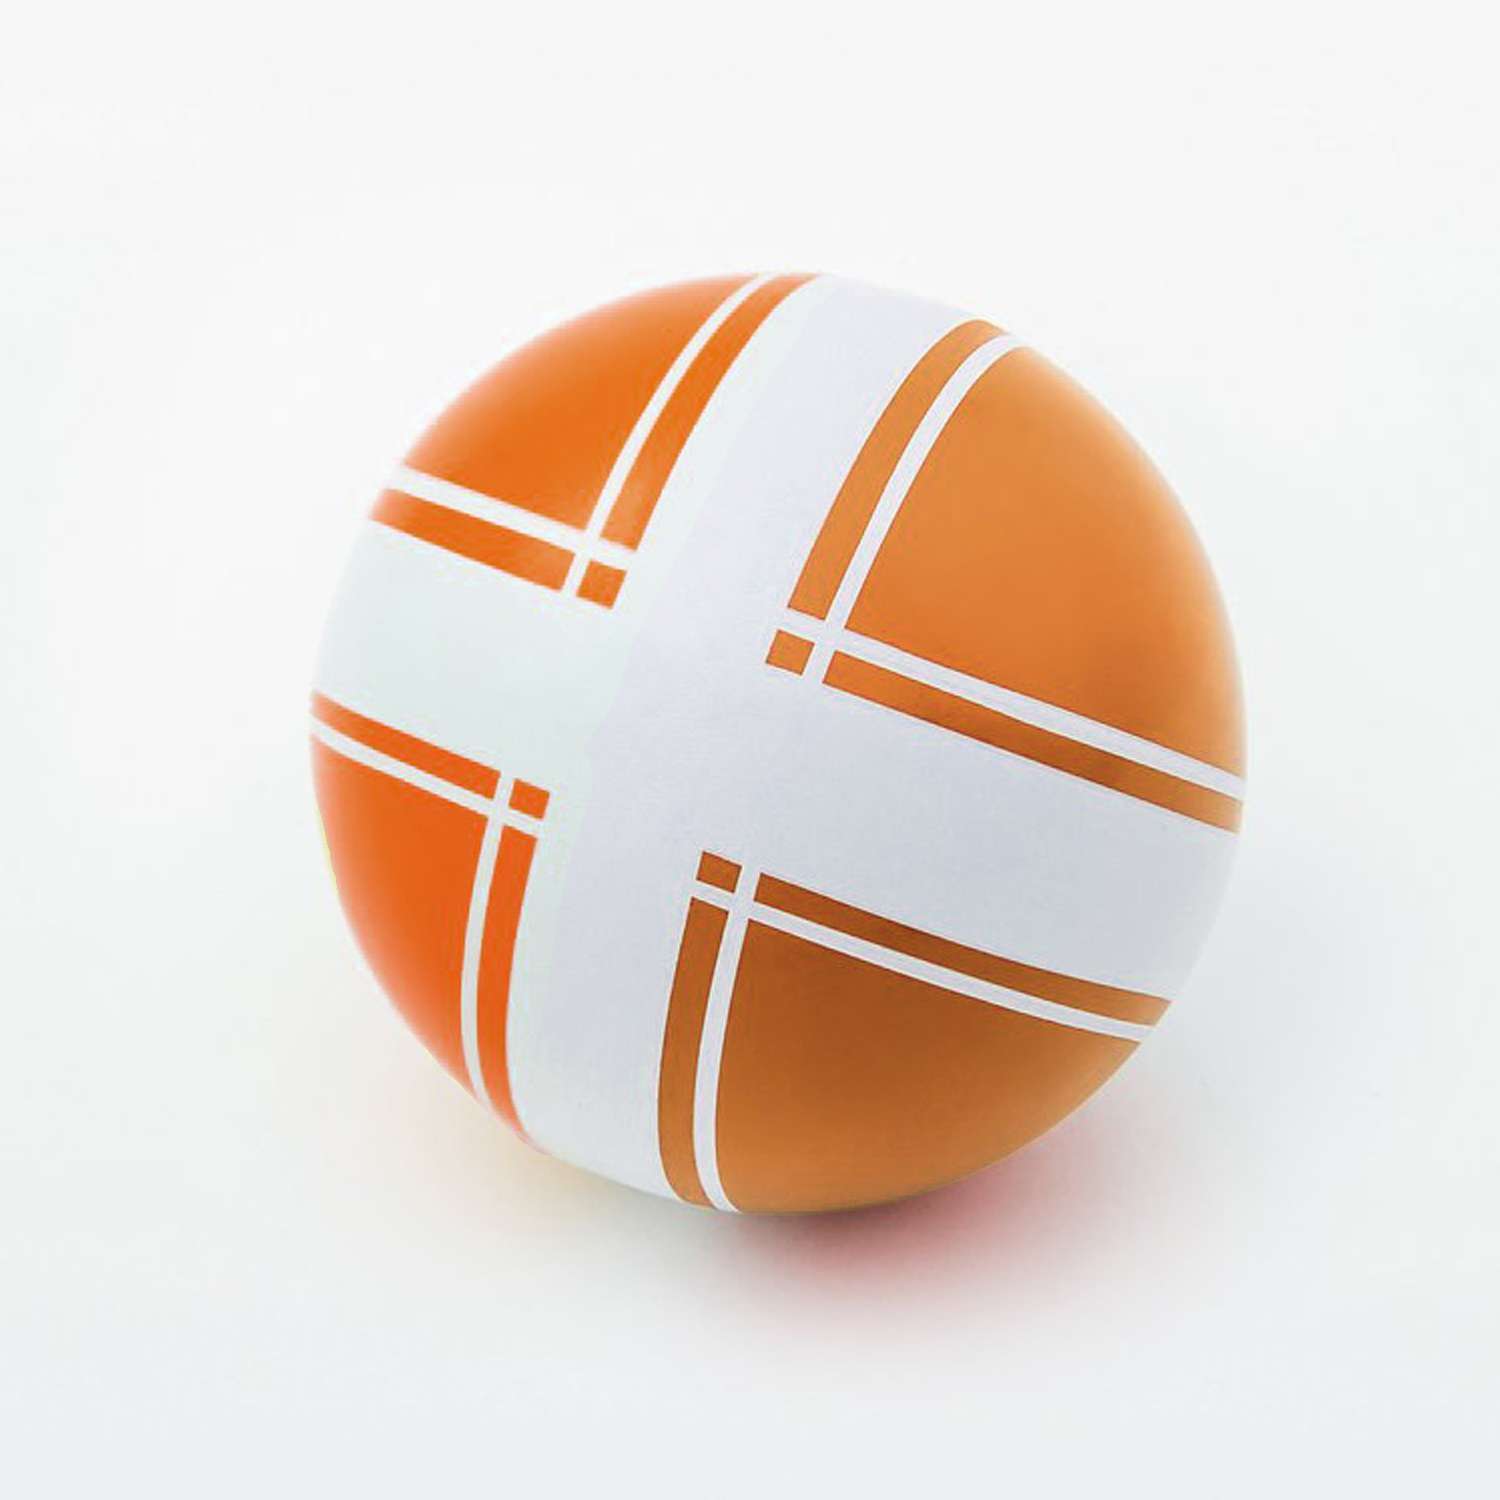 Мяч ЧАПАЕВ диаметр 75 мм «Крестики нолики» оранжевый - фото 2